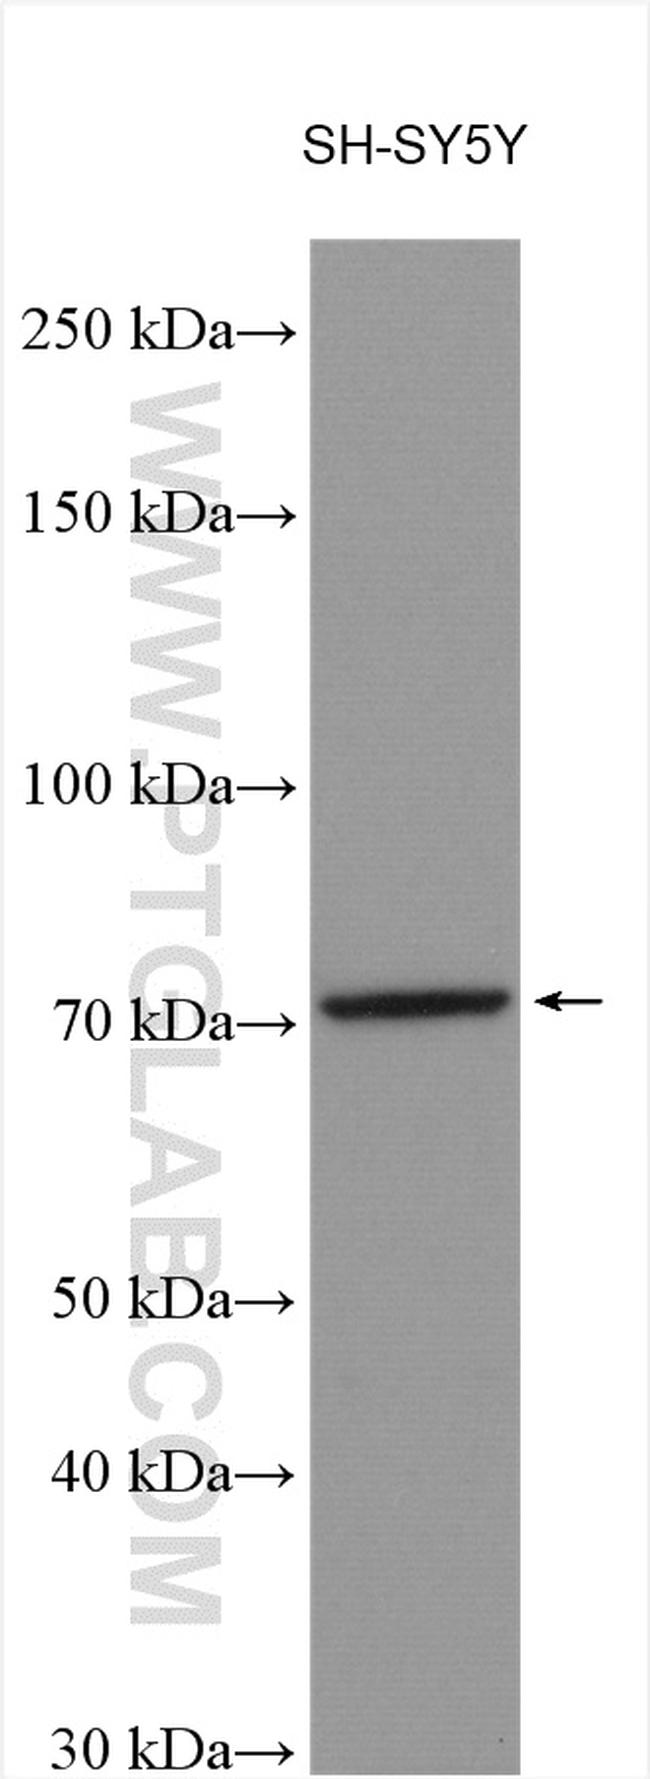 Secretogranin II Antibody in Western Blot (WB)